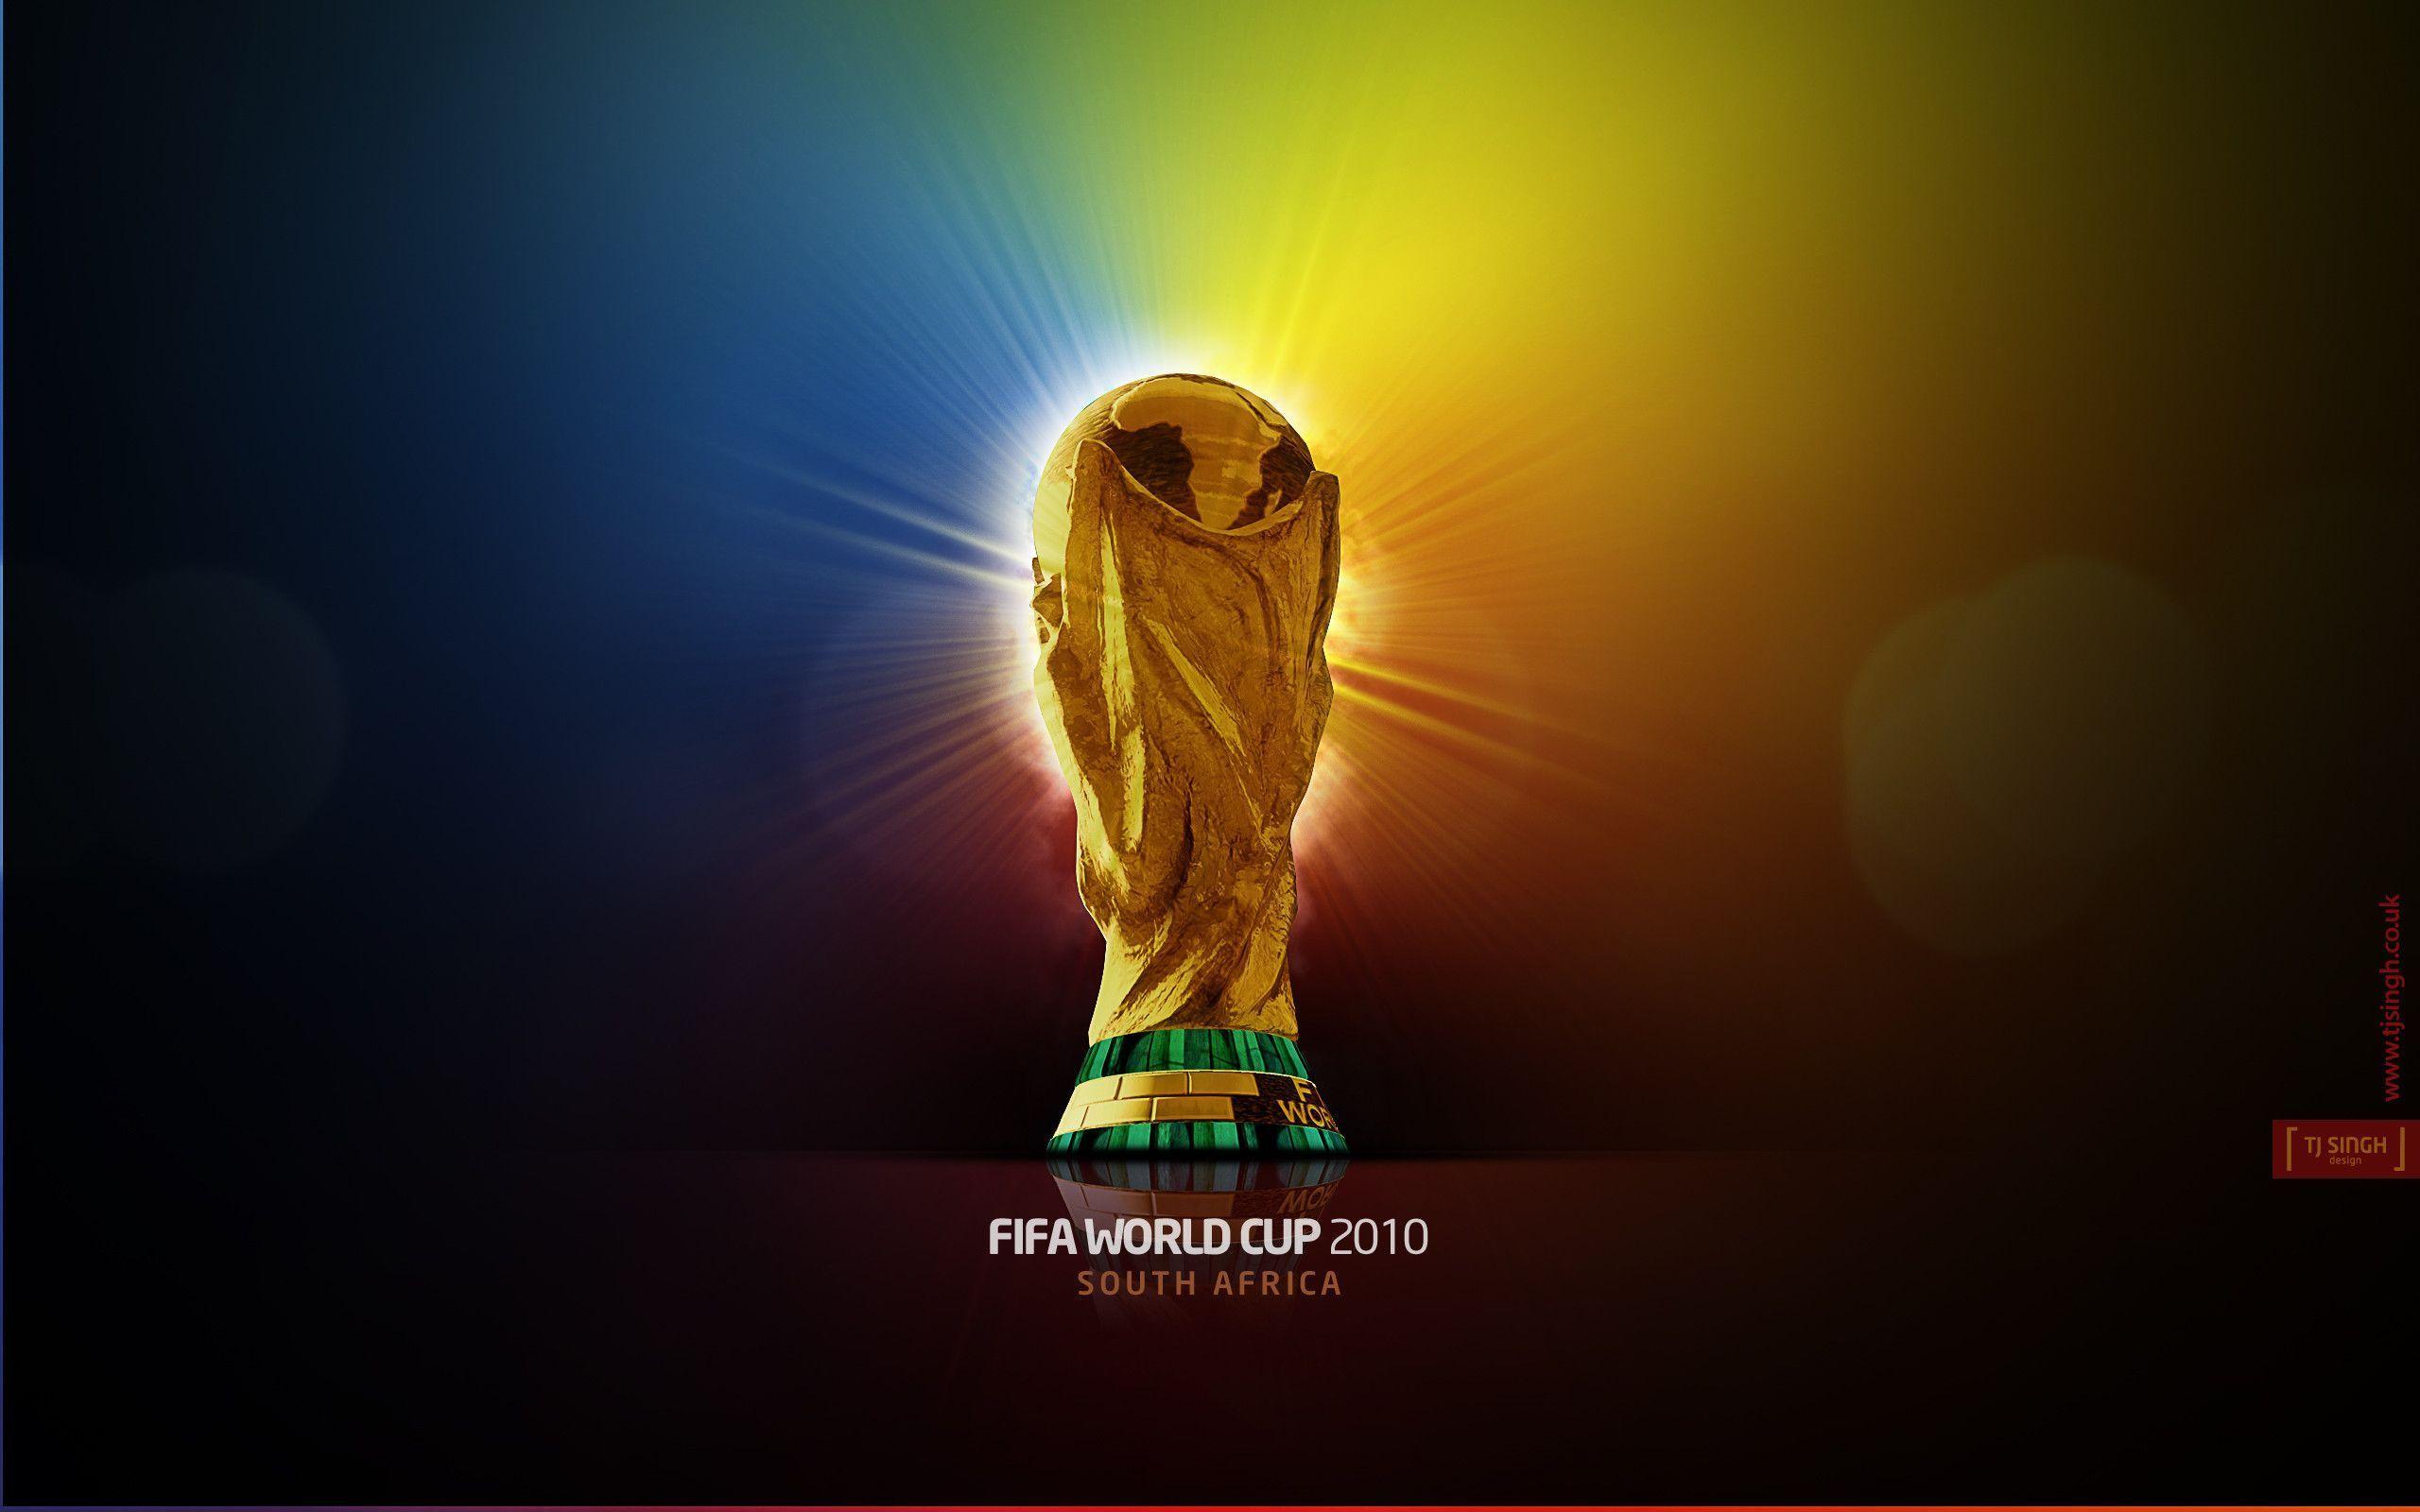 FIFA World Cup 2010 trofeo fondos de pantalla. FIFA World Cup